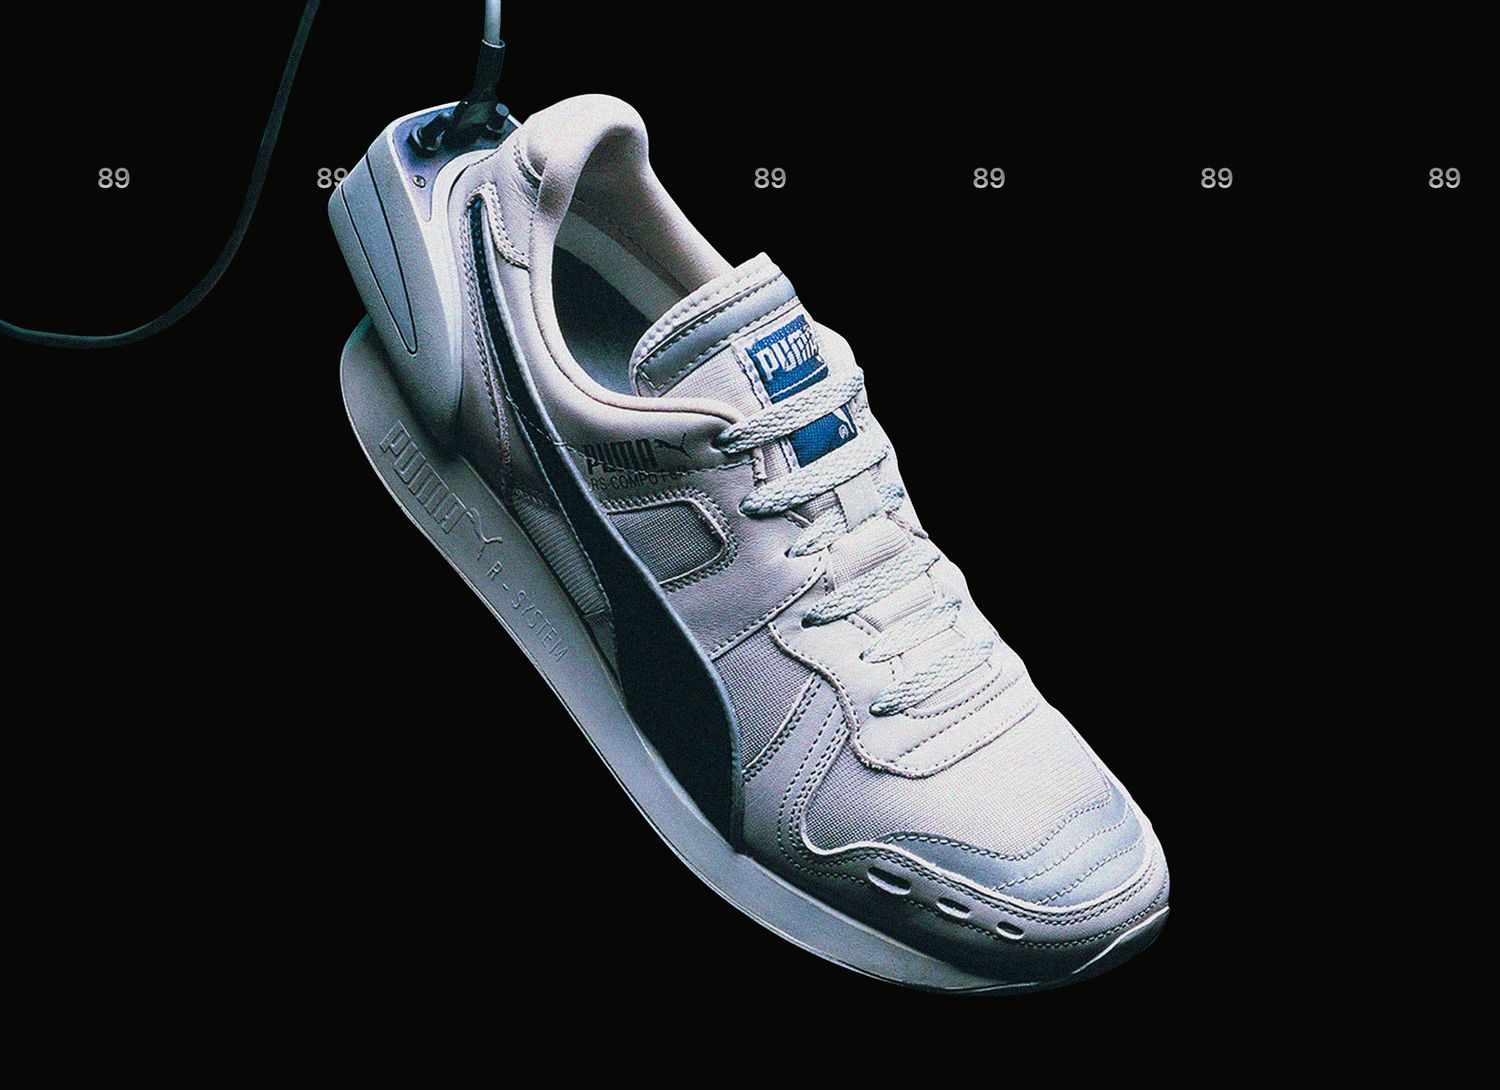 Puma or Upma? Man's post of fake German brand shoes evokes